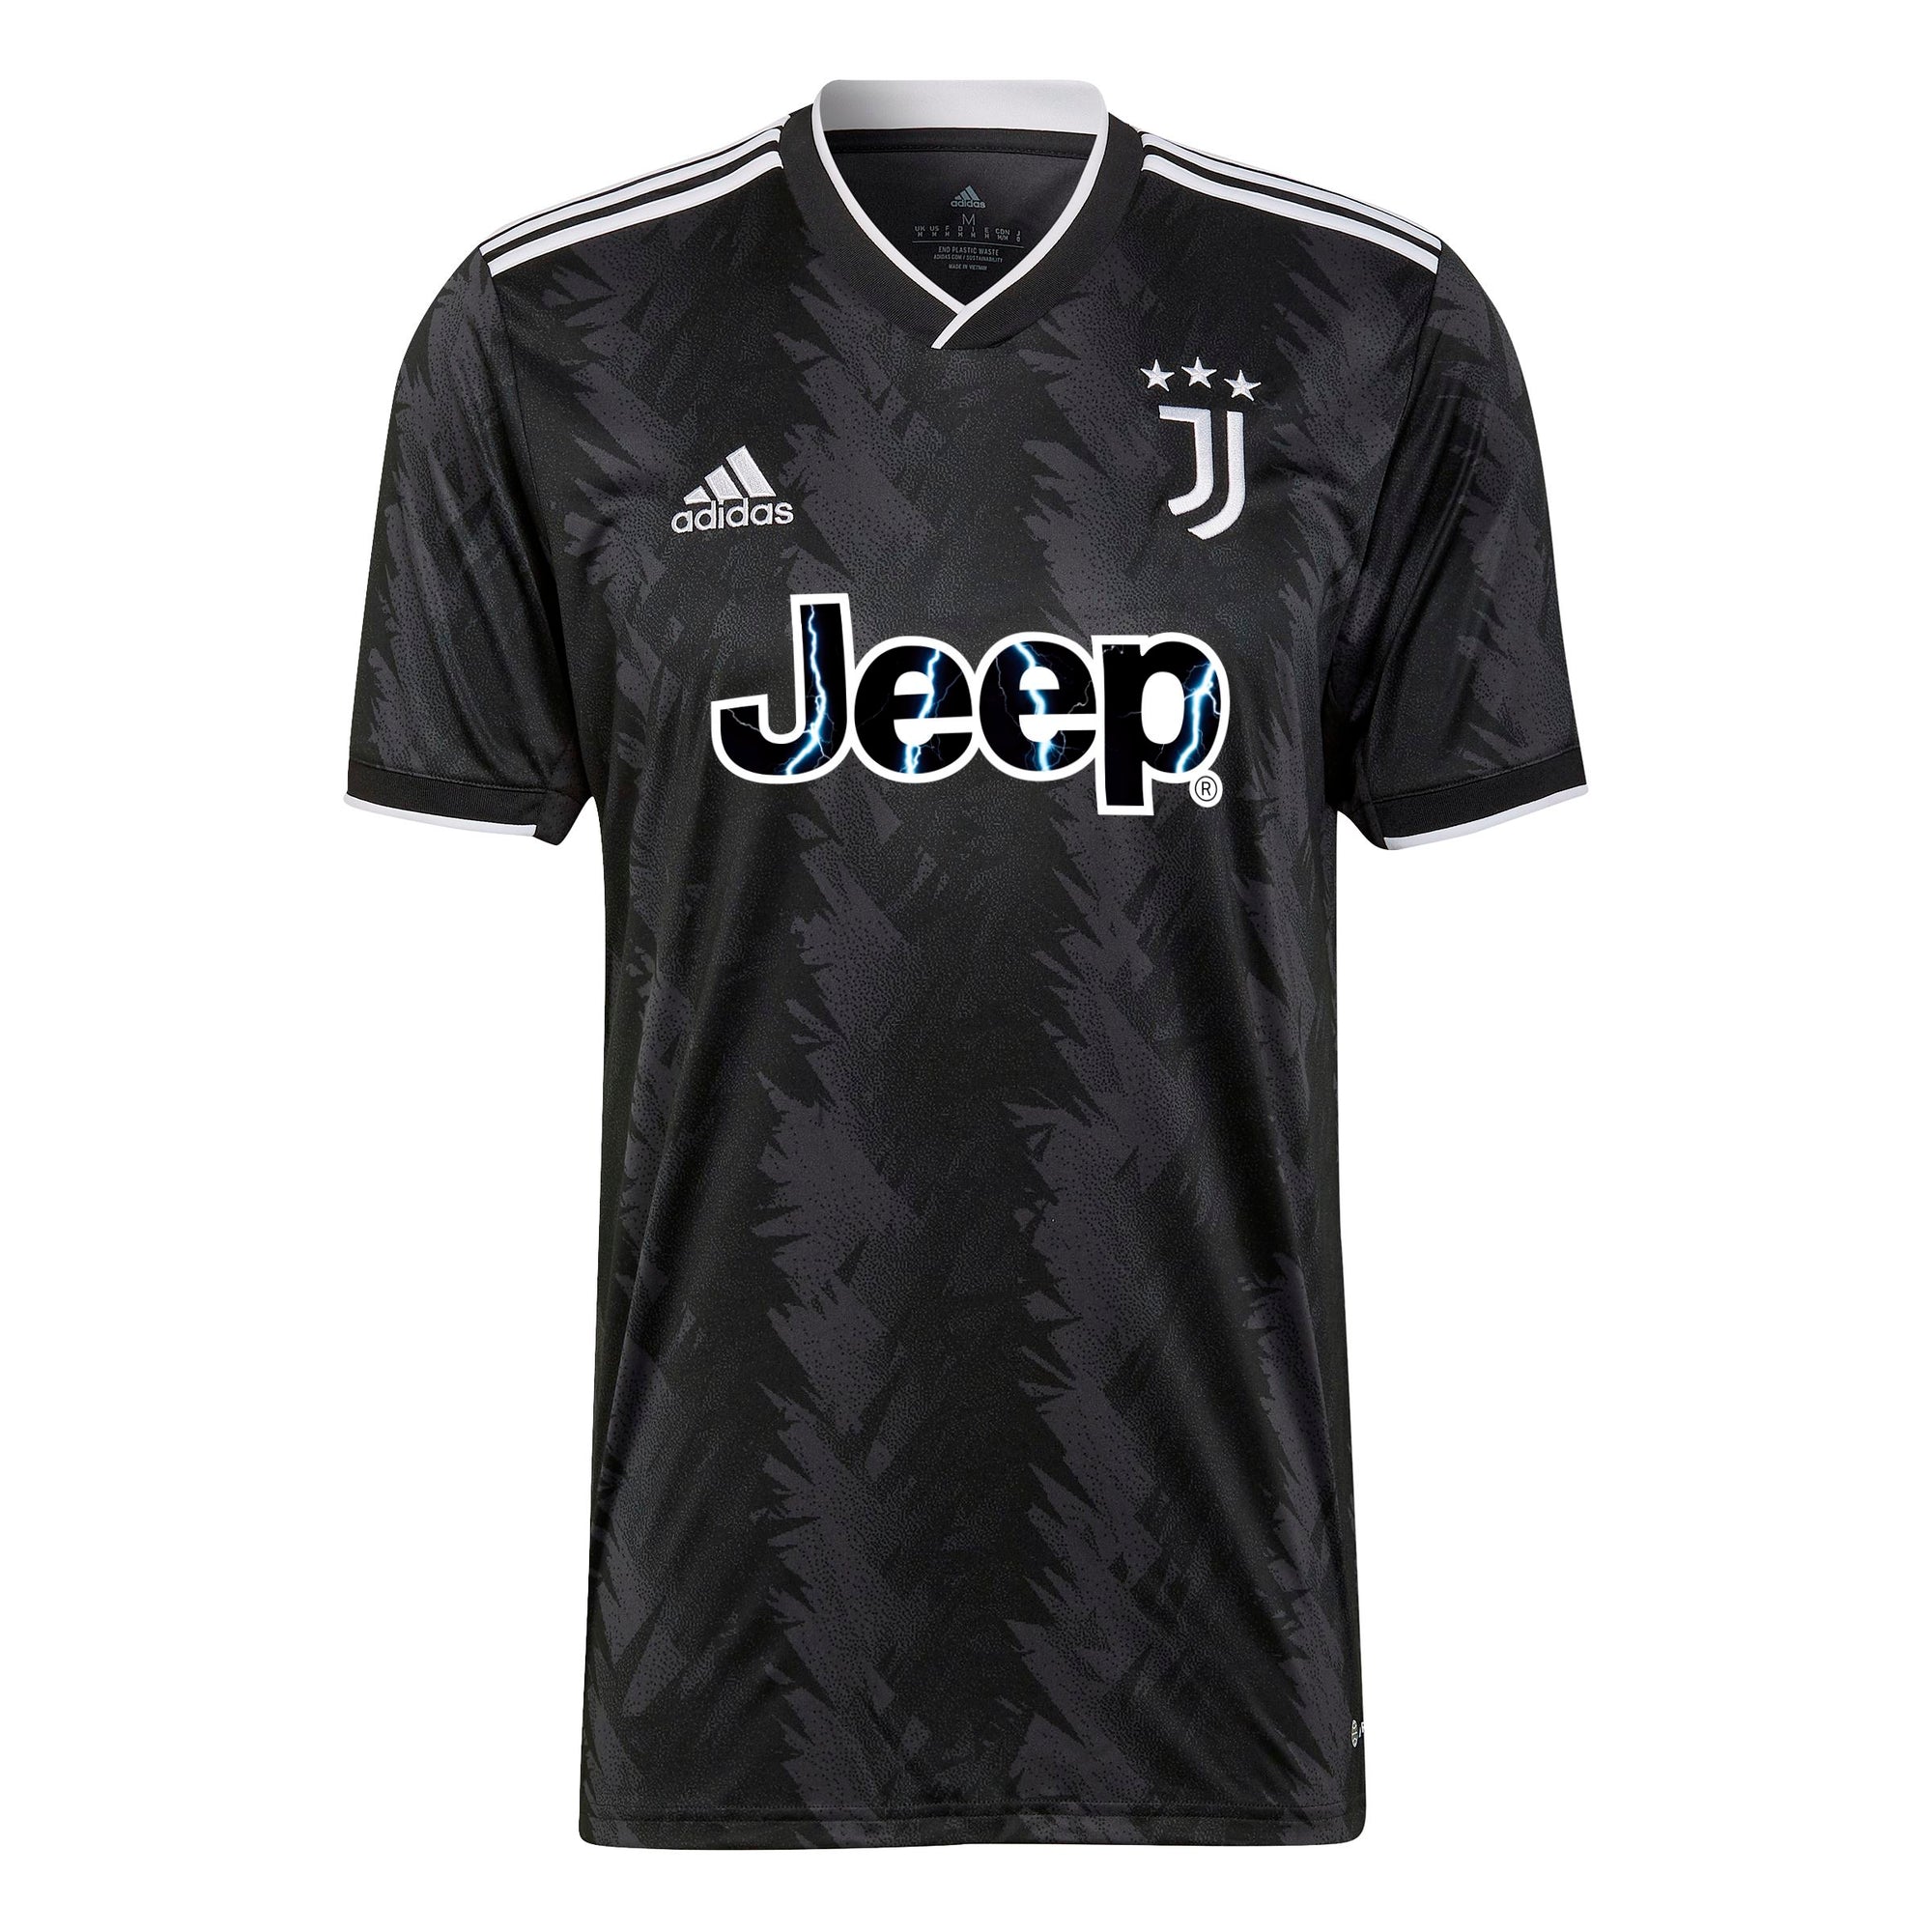 adidas Men's Juventus 22/23 Away Jersey | HD2015 Jersey Adidas Adult Small Black/White/Carbon 